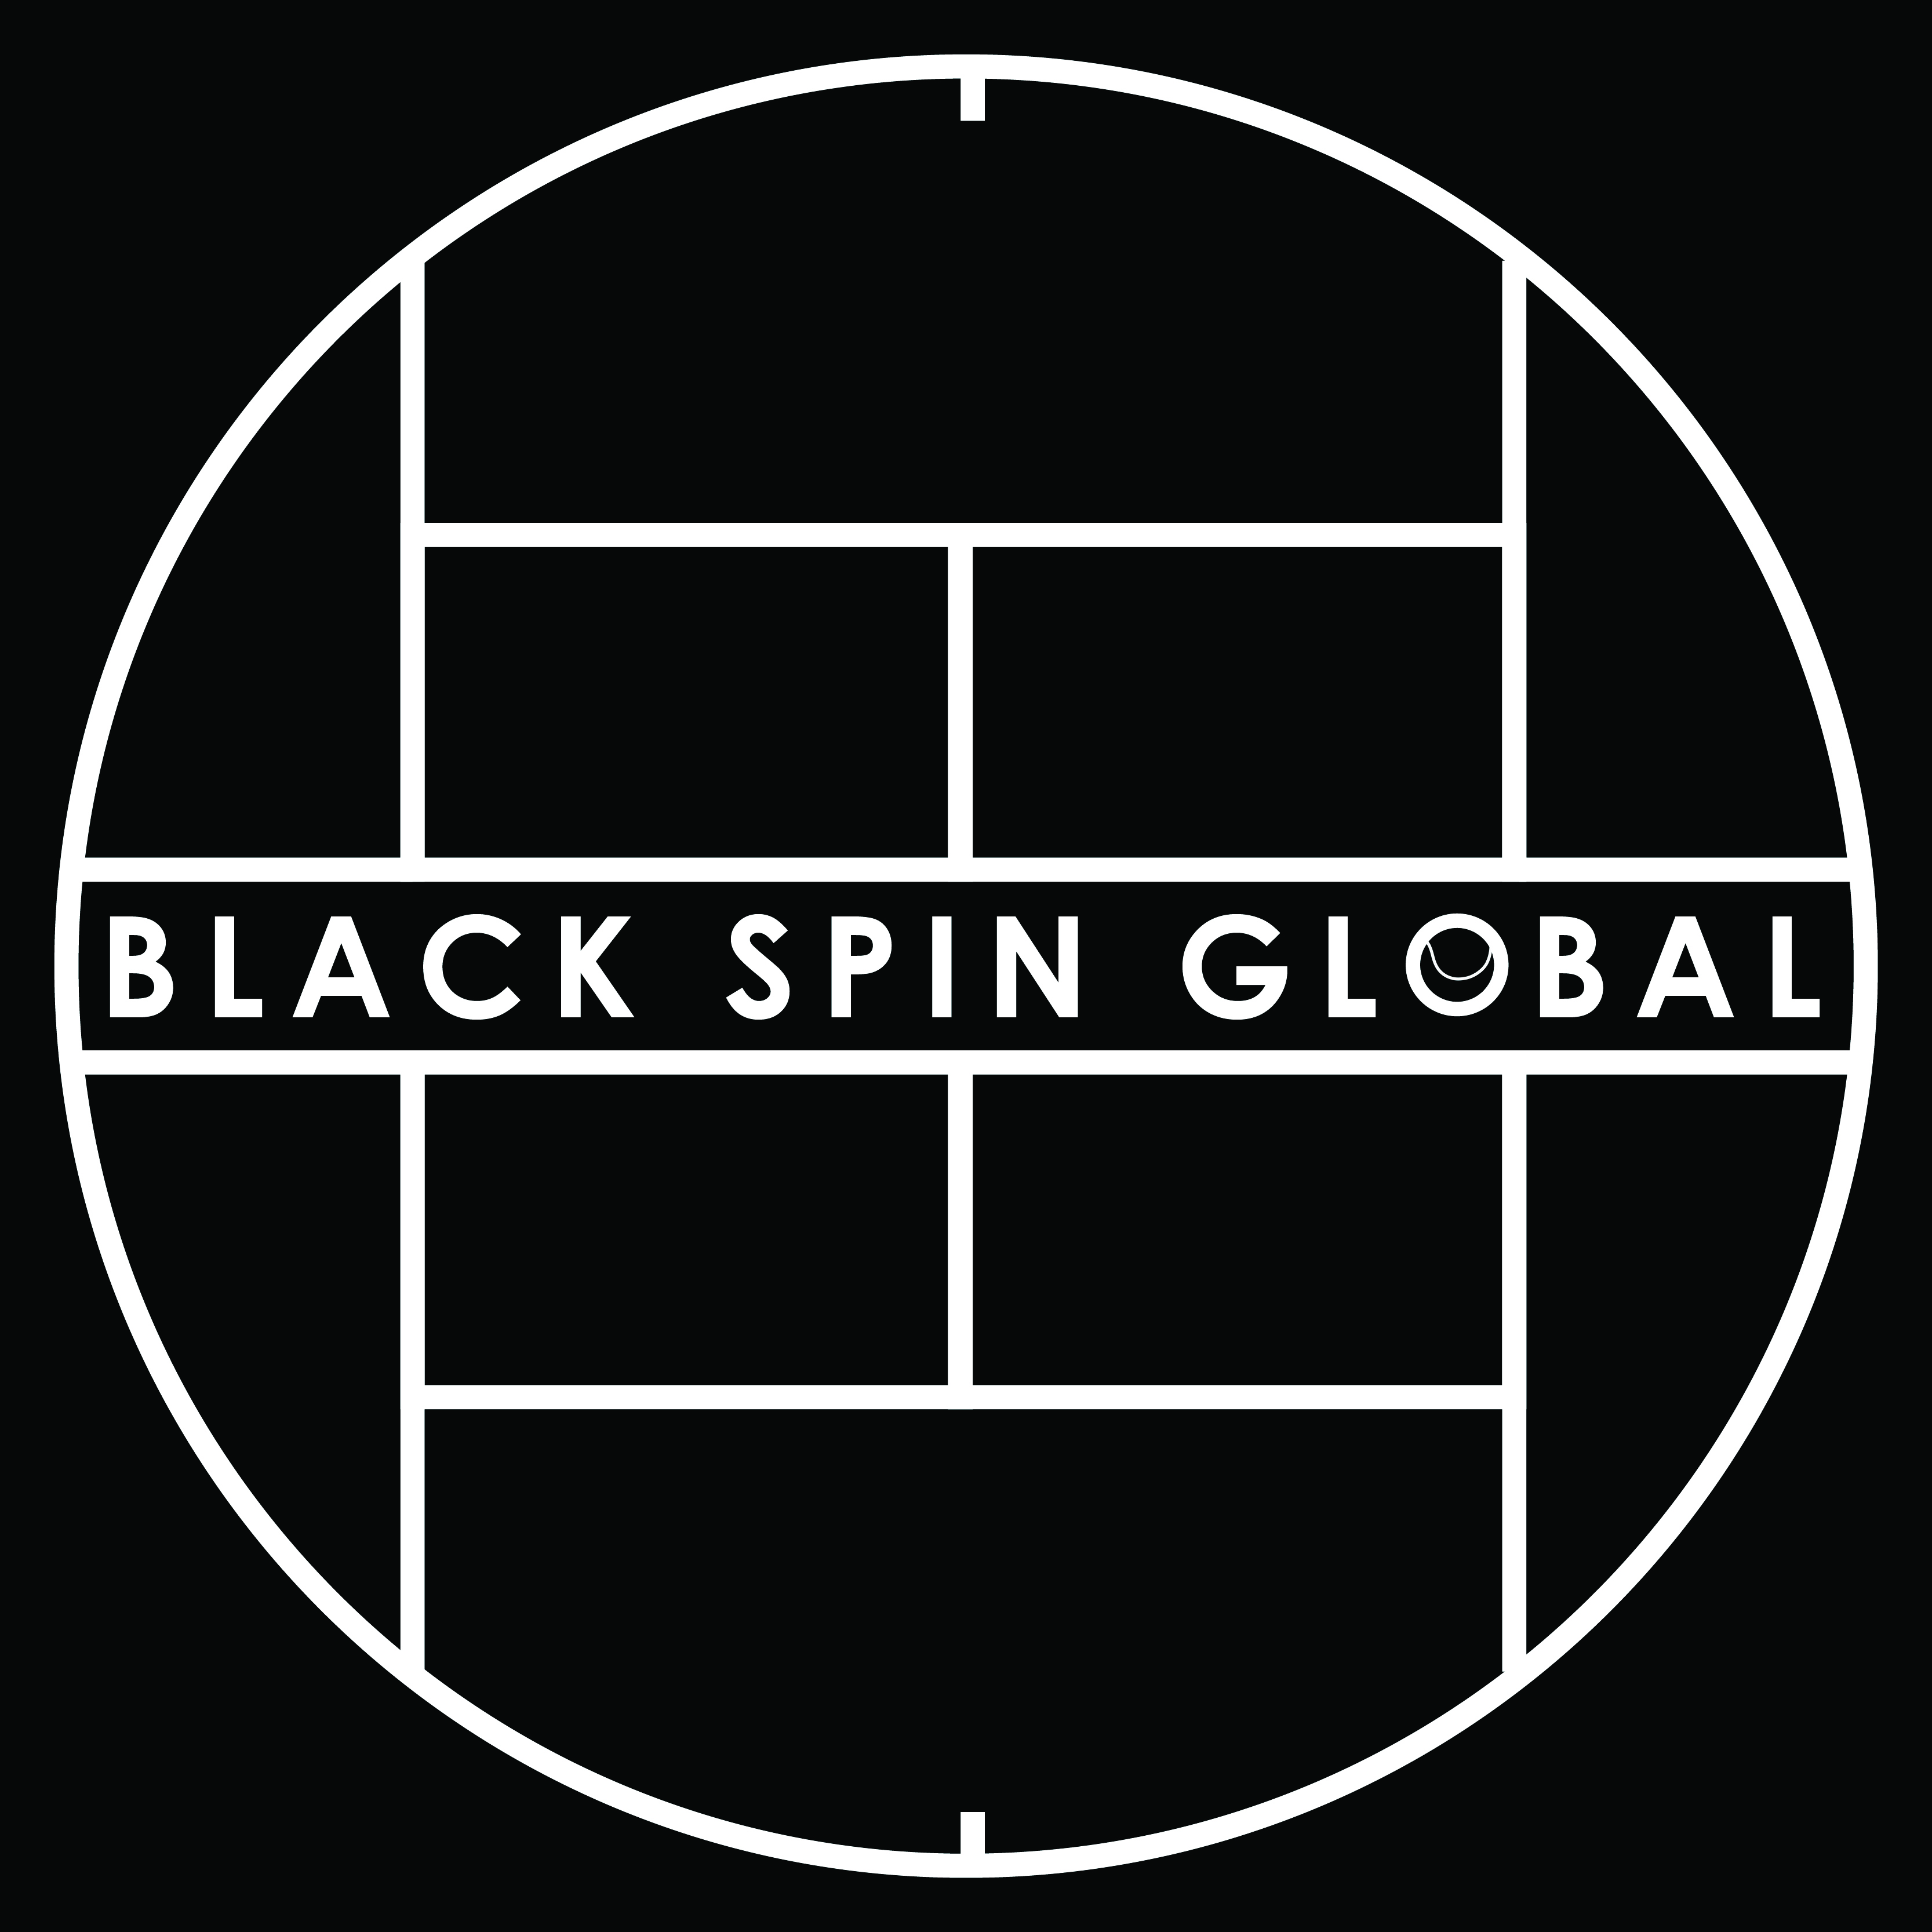 Black spin